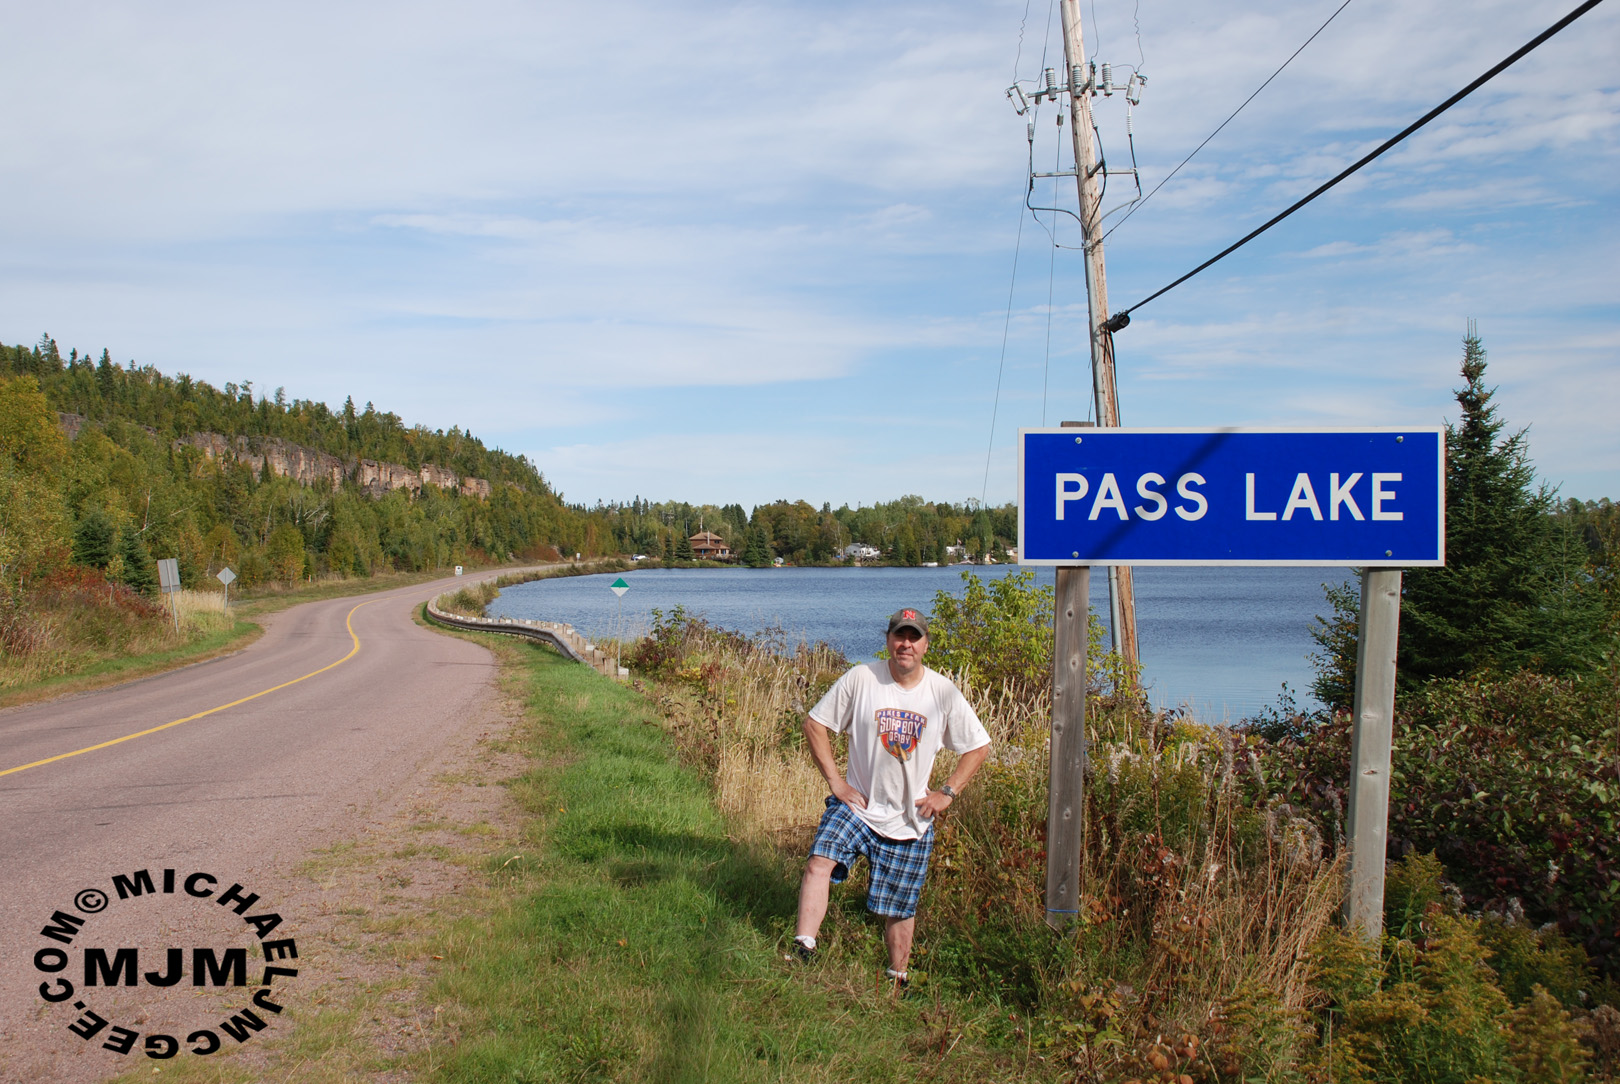 Pass lake / michaeljmcgee.com